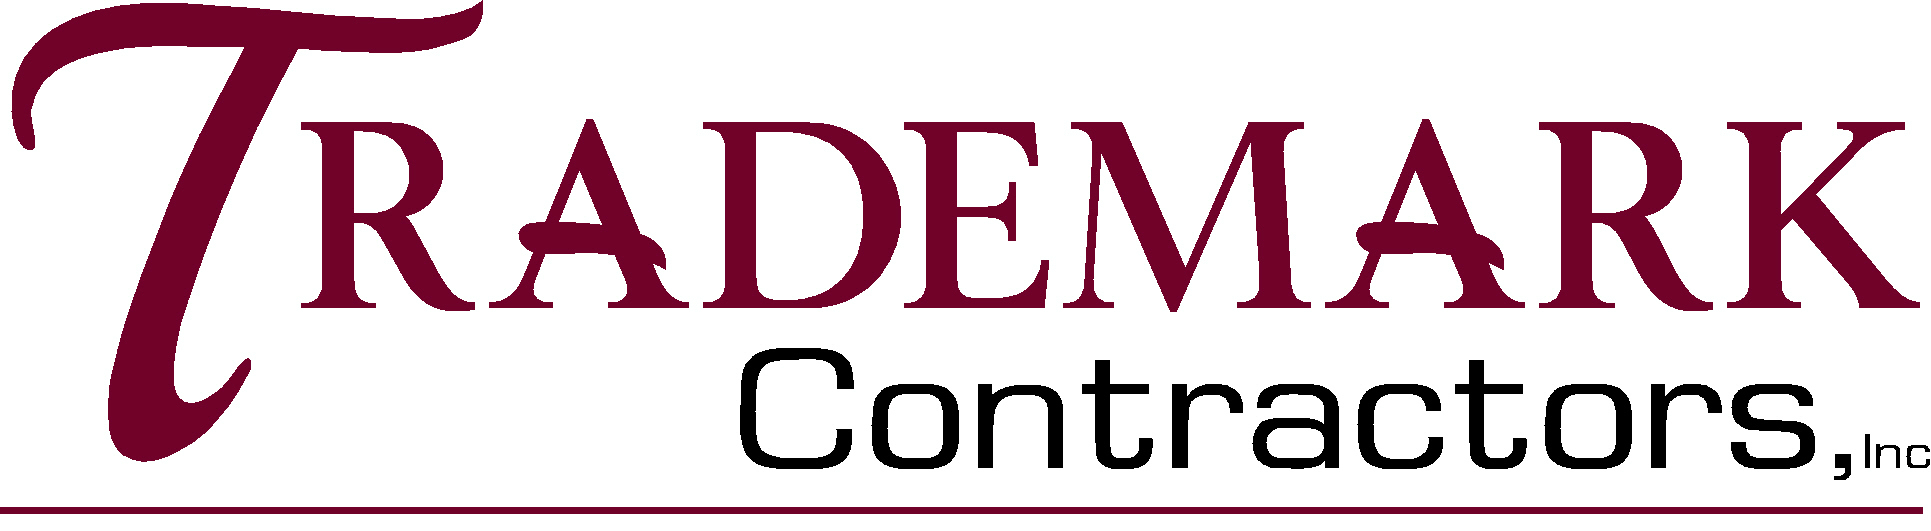 Trademark Contractors, Inc. Logo